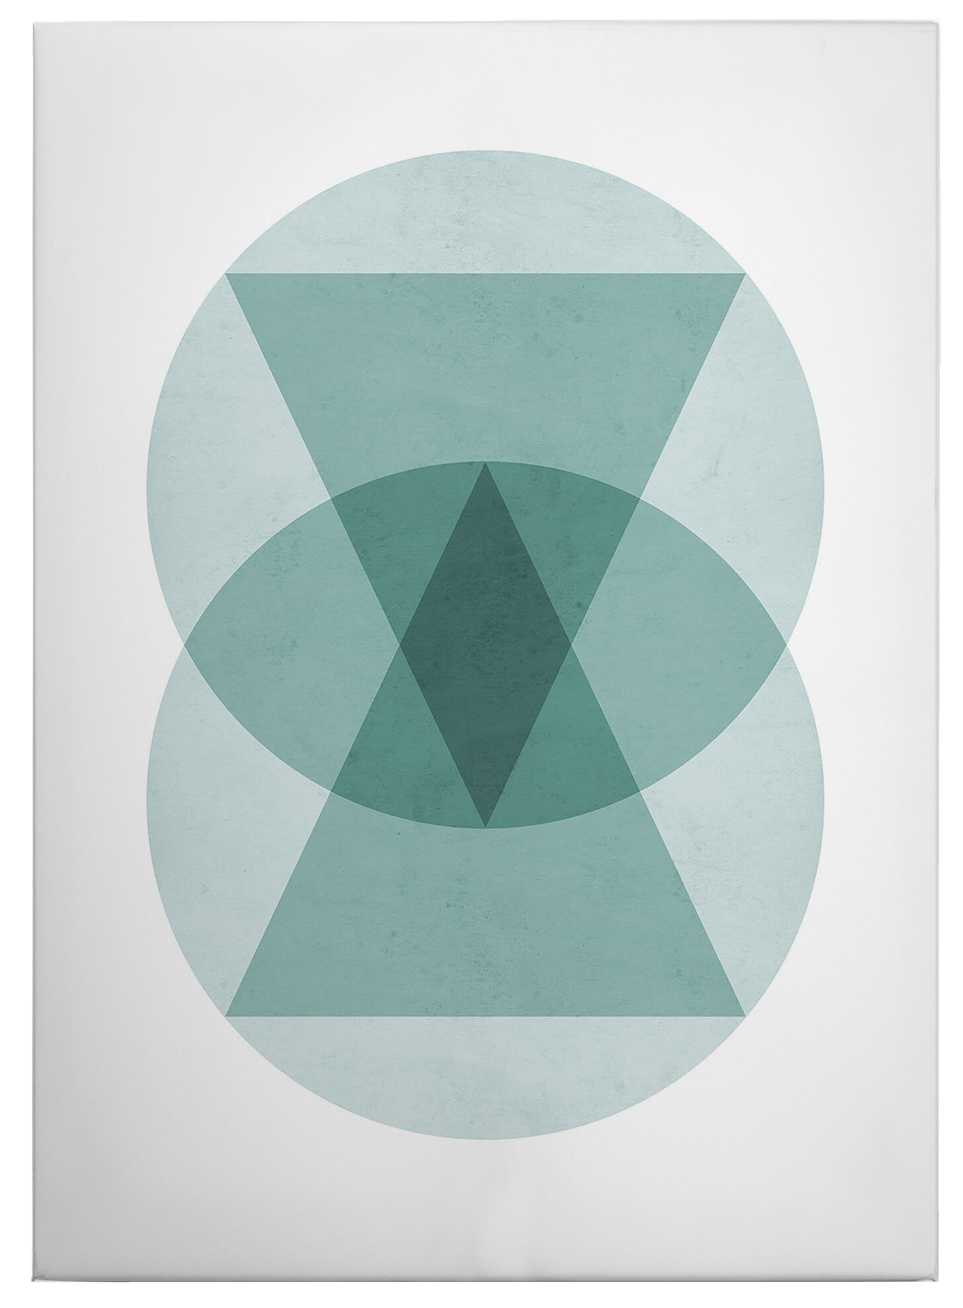             Leinwandbild geometrisches Muster Kreise Dreiecke – 0,50 m x 0,70 m
        